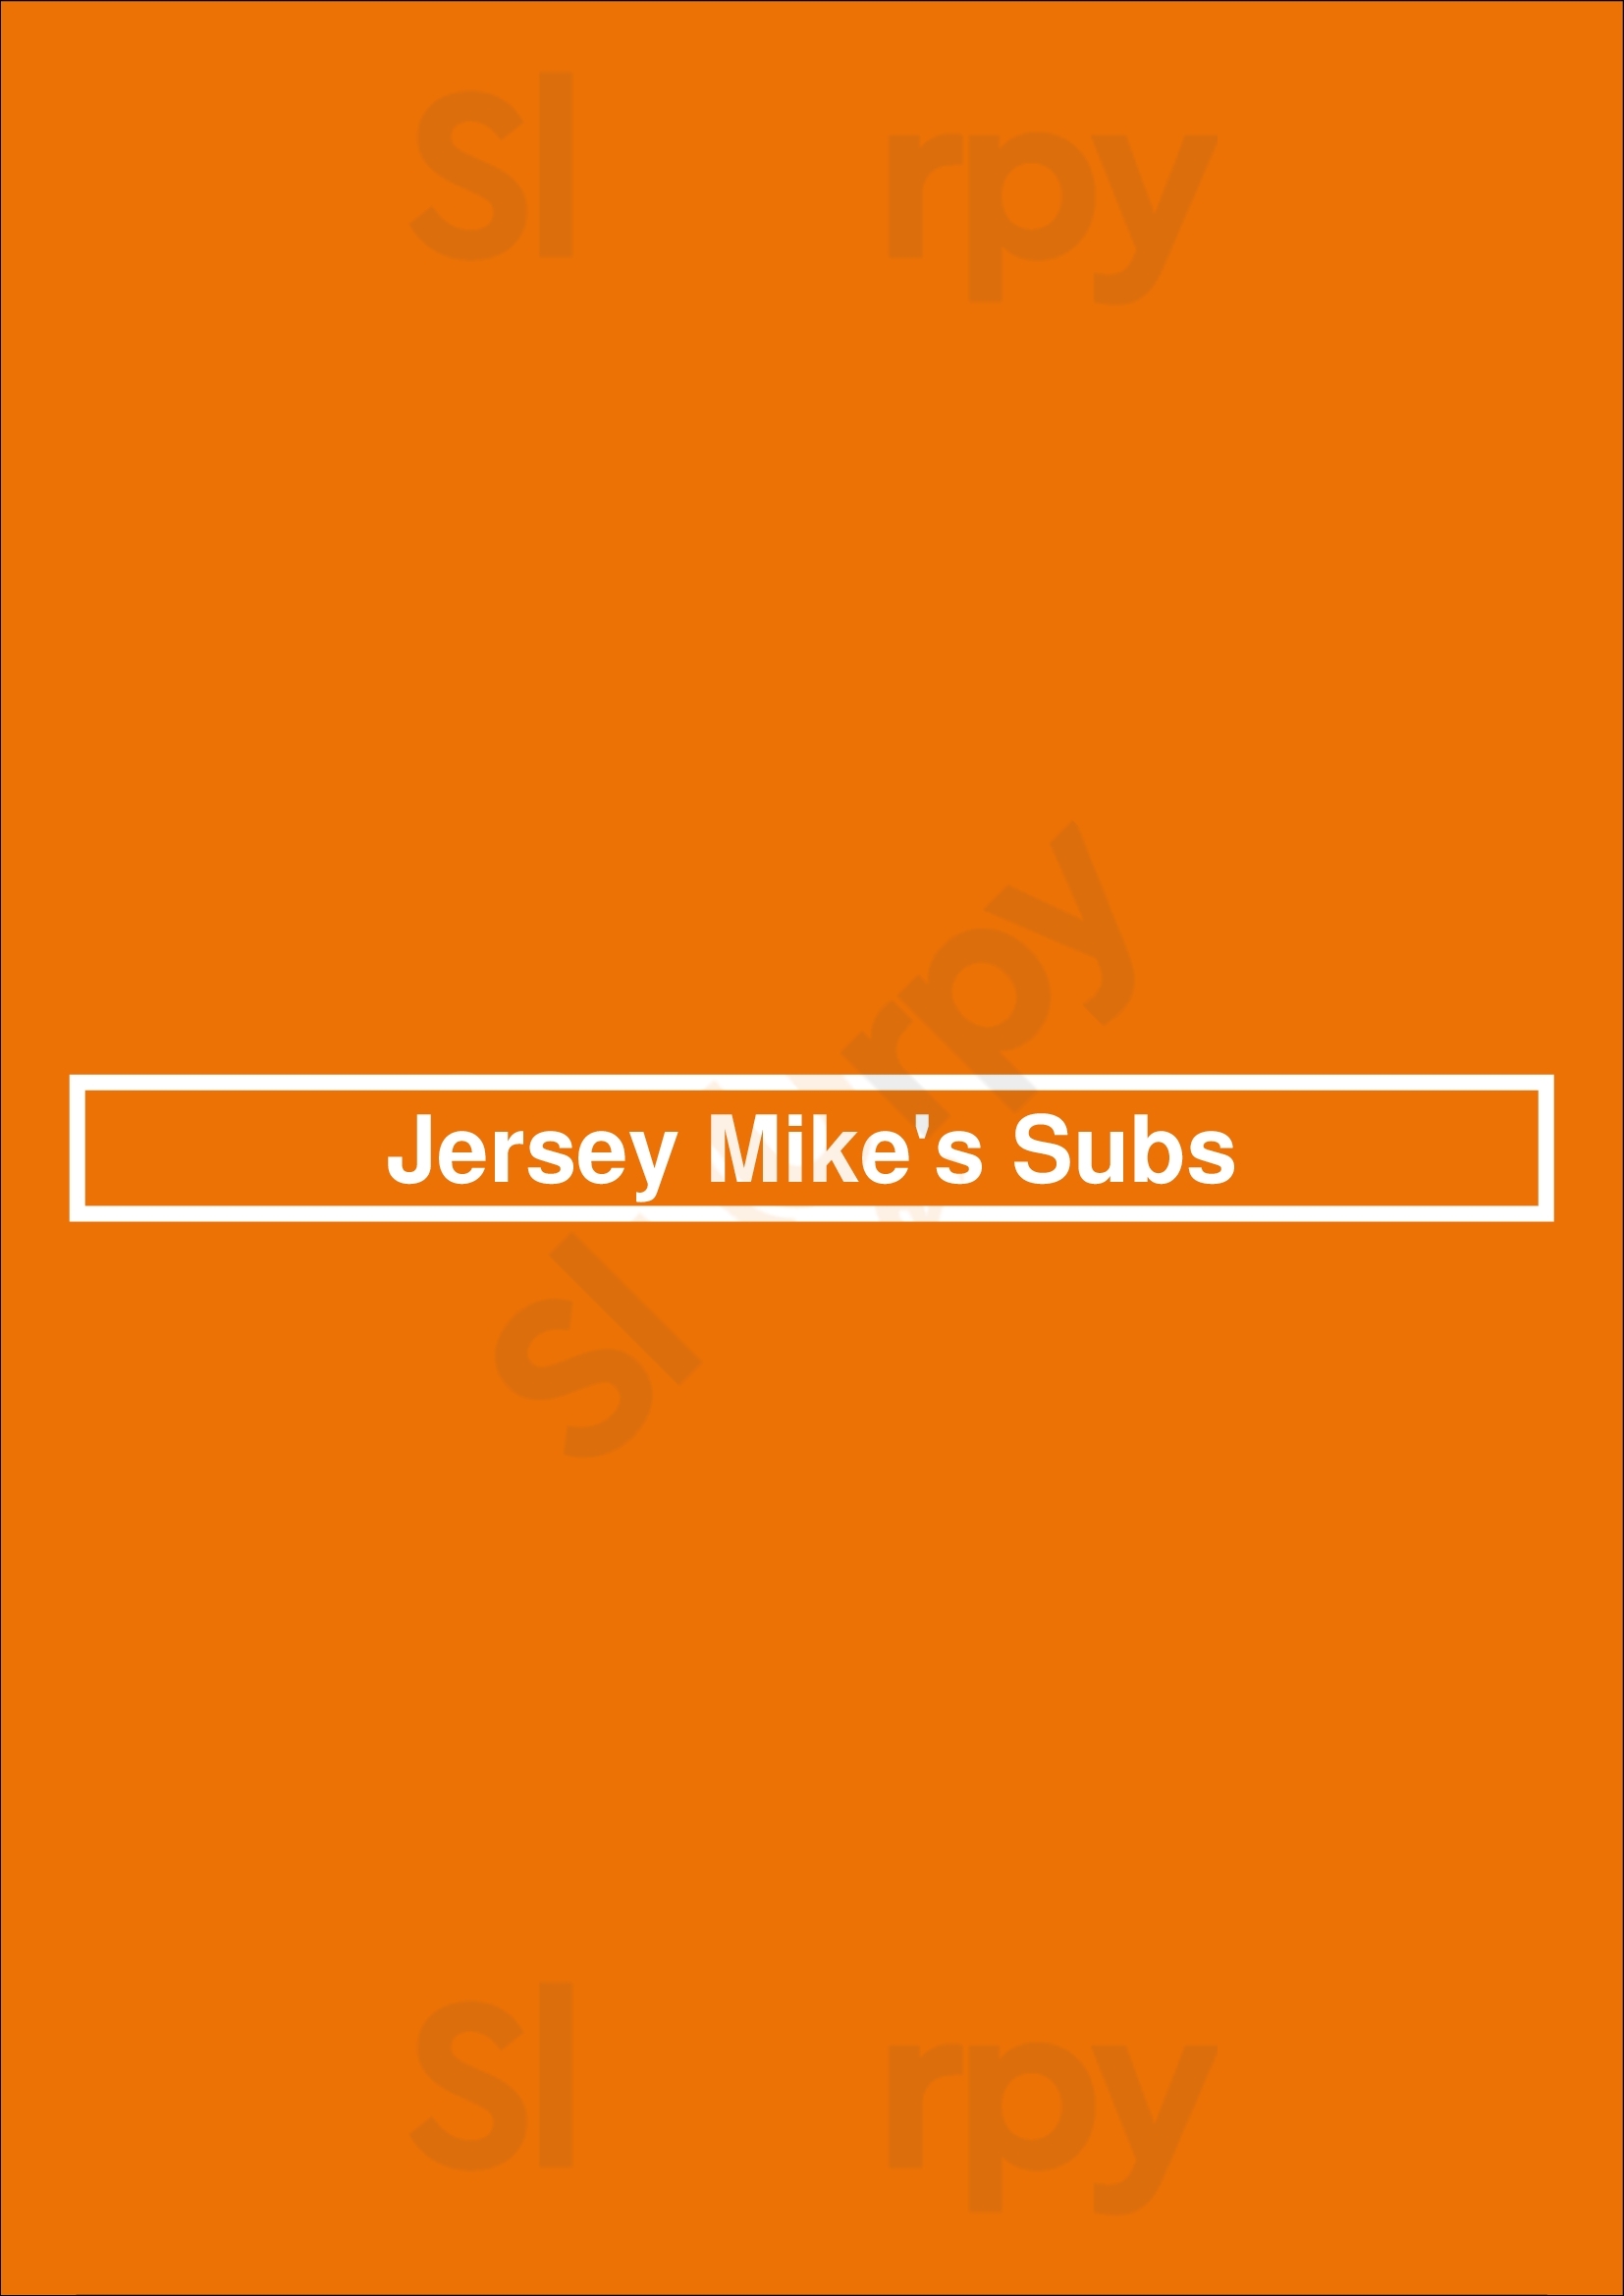 Jersey Mike's Subs Denver Menu - 1